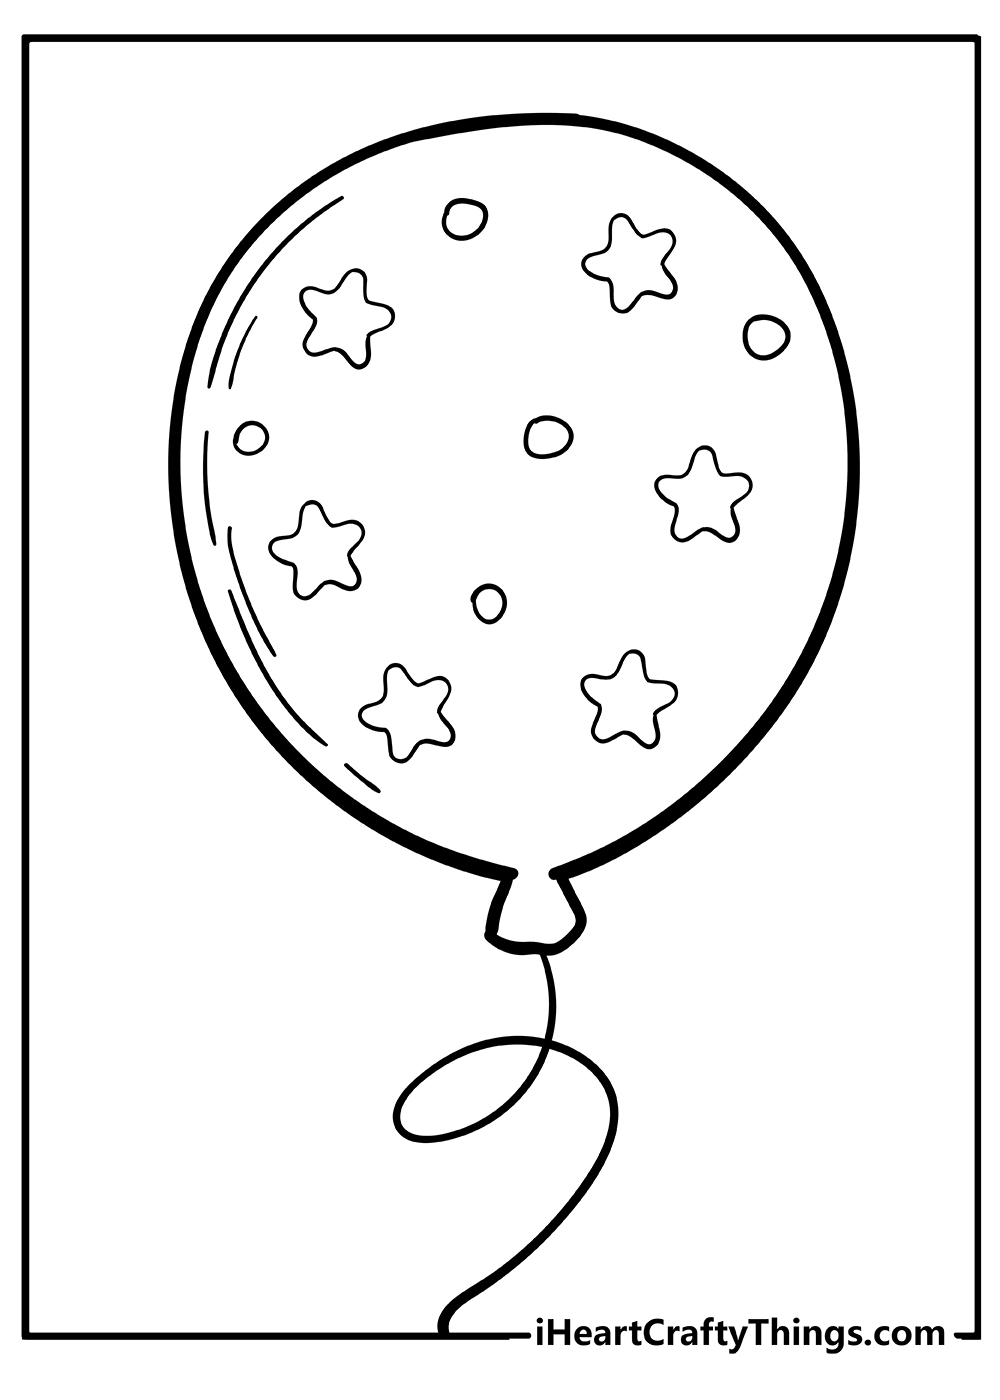 Free Printable Balloon Template